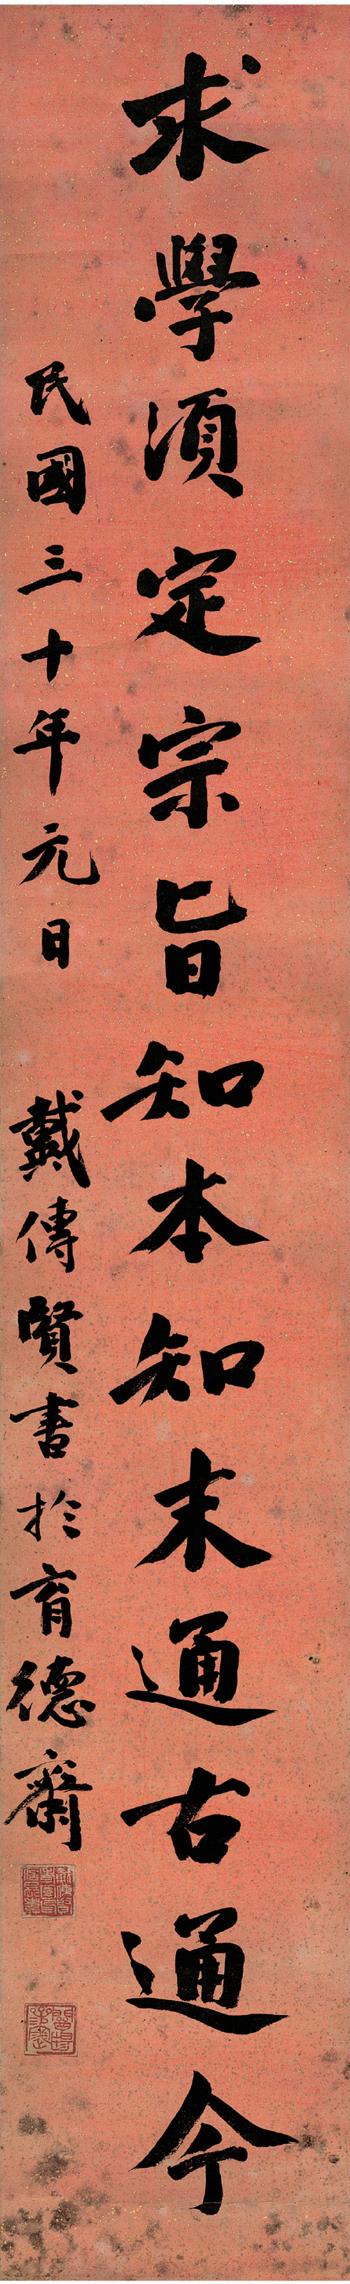 Calligraphy in regular script by 
																	 Dai Jitao